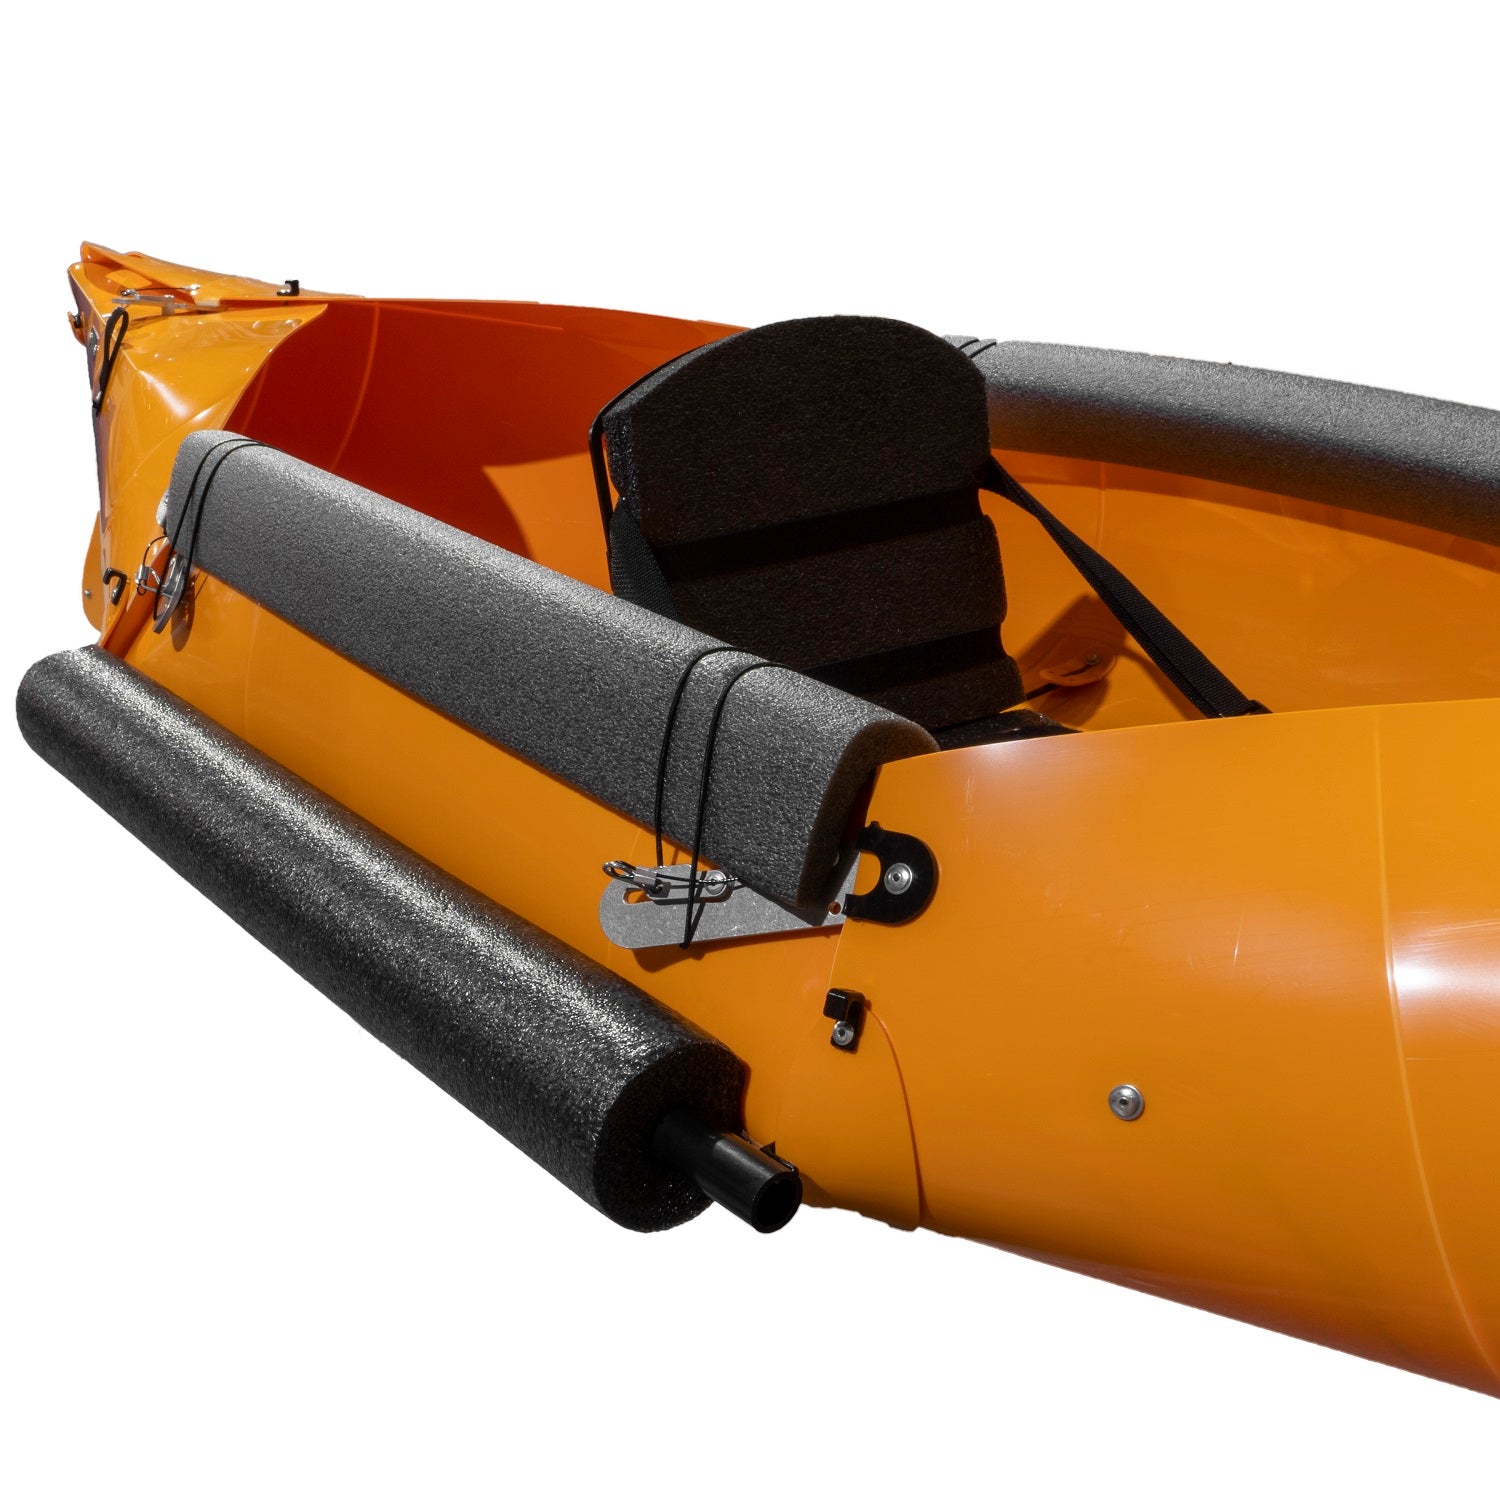 Folding Fishing Kayak Bundle - Kayak with Anchor Cooler and Stabilizer